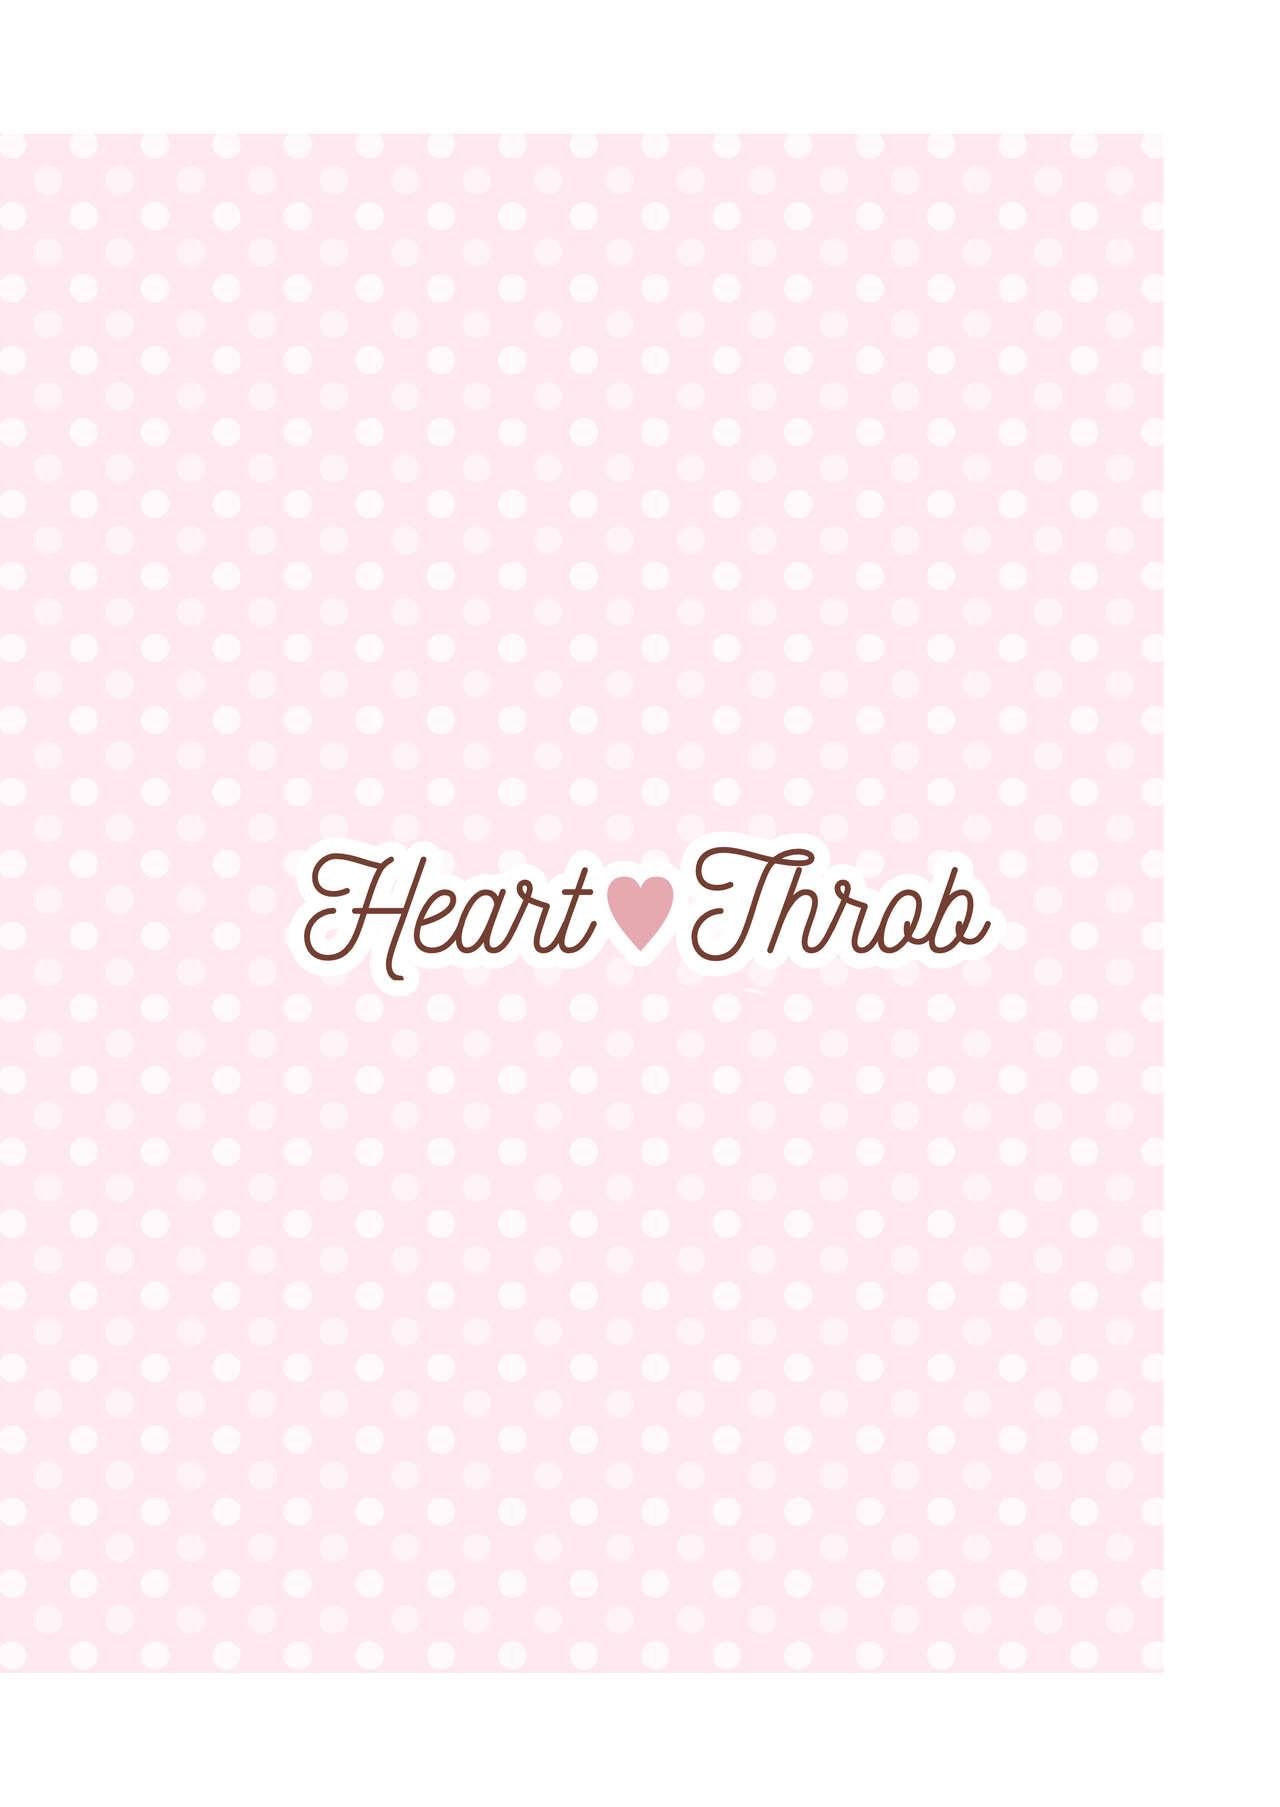 Heart Throb 2 22